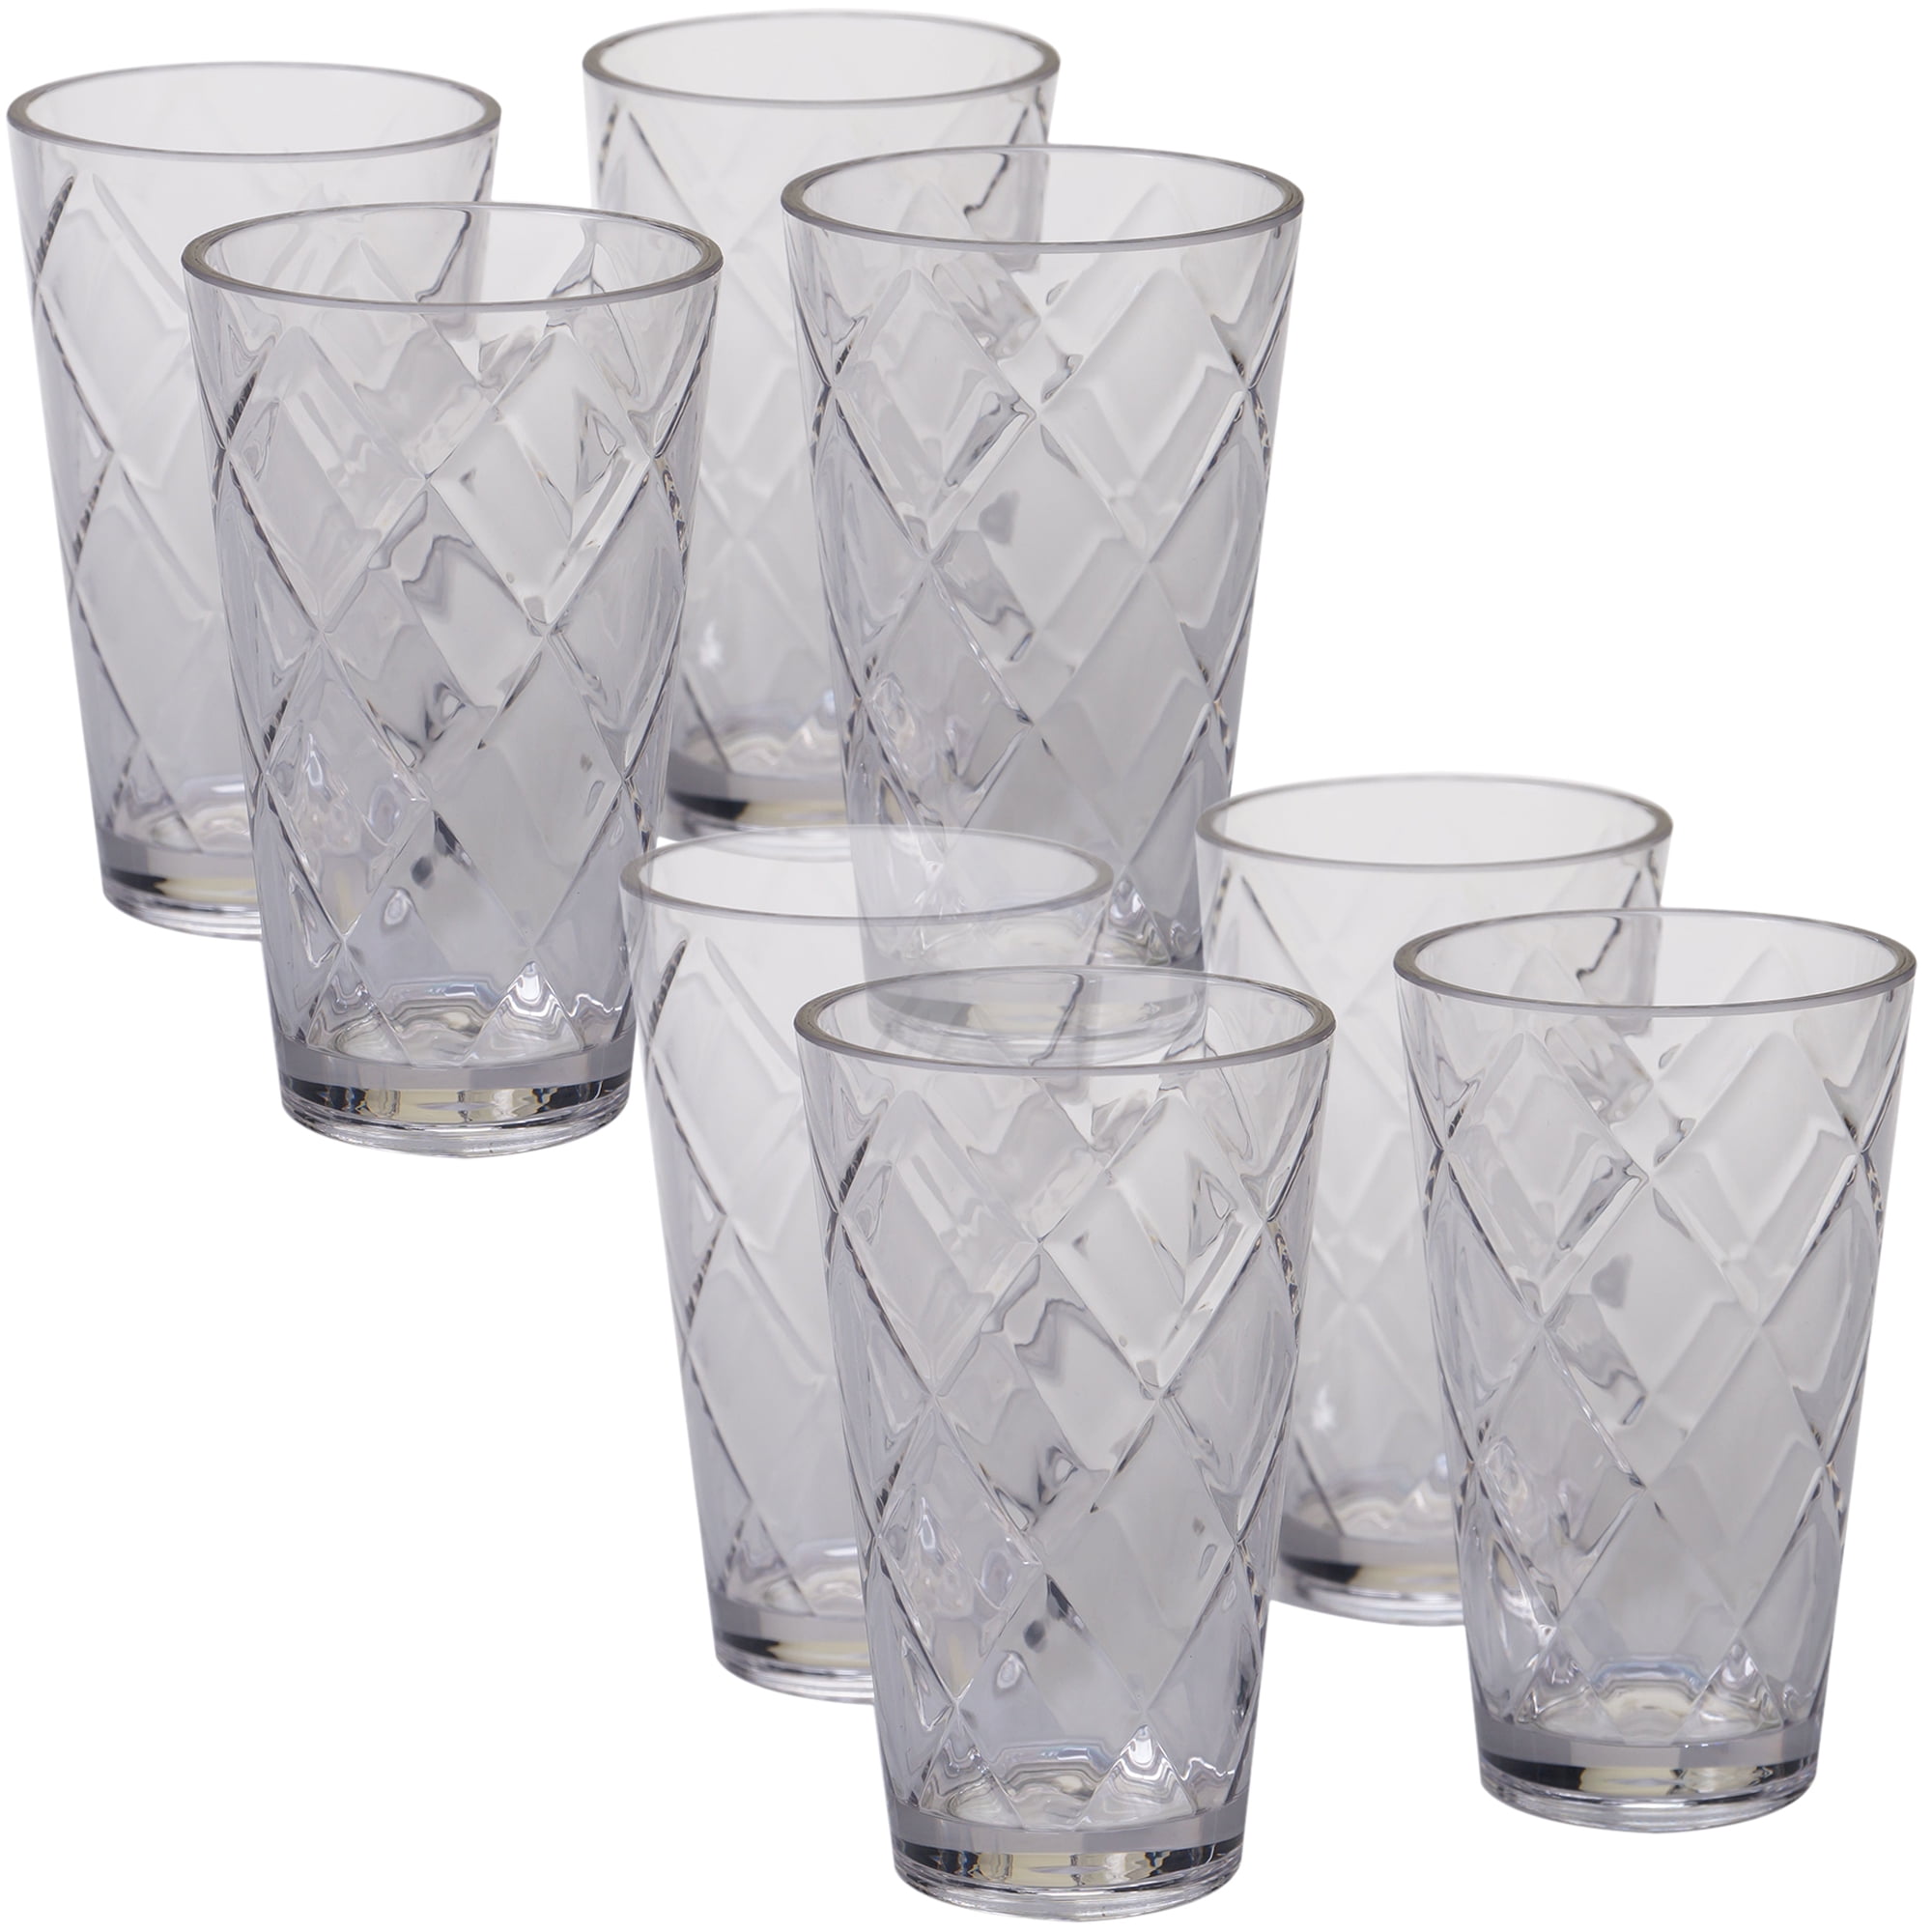 Acrylic Drinking Glass Tubes For Long Island Iced Tea - Liit Glass 1000Ml